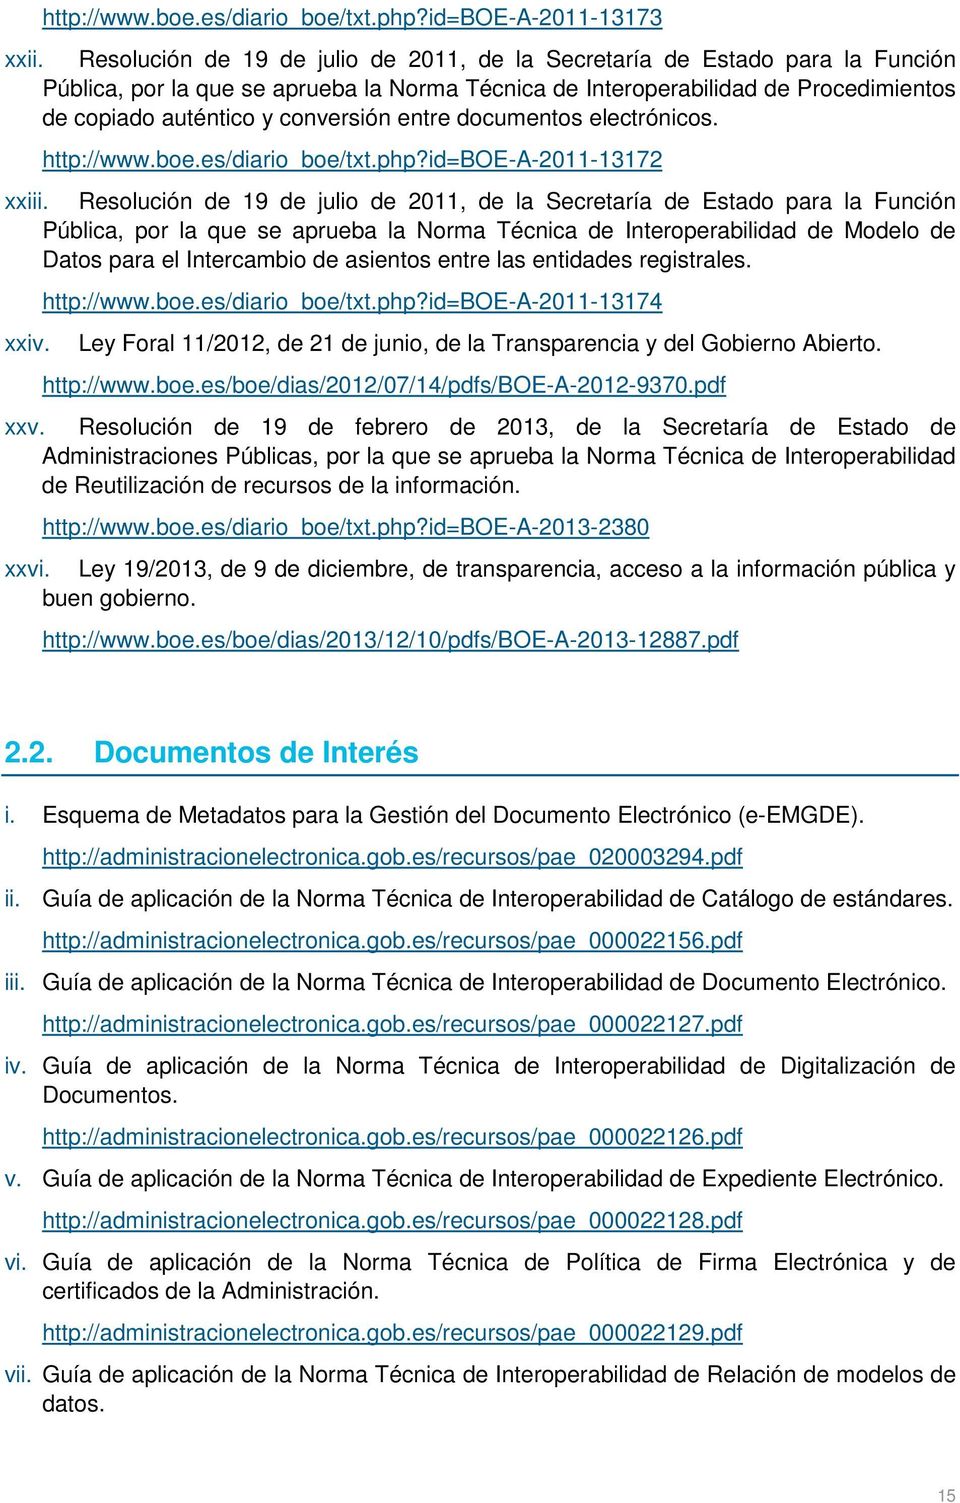 entre documentos electrónicos. http://www.boe.es/diario_boe/txt.php?id=boe-a-2011-13172 xxiii.